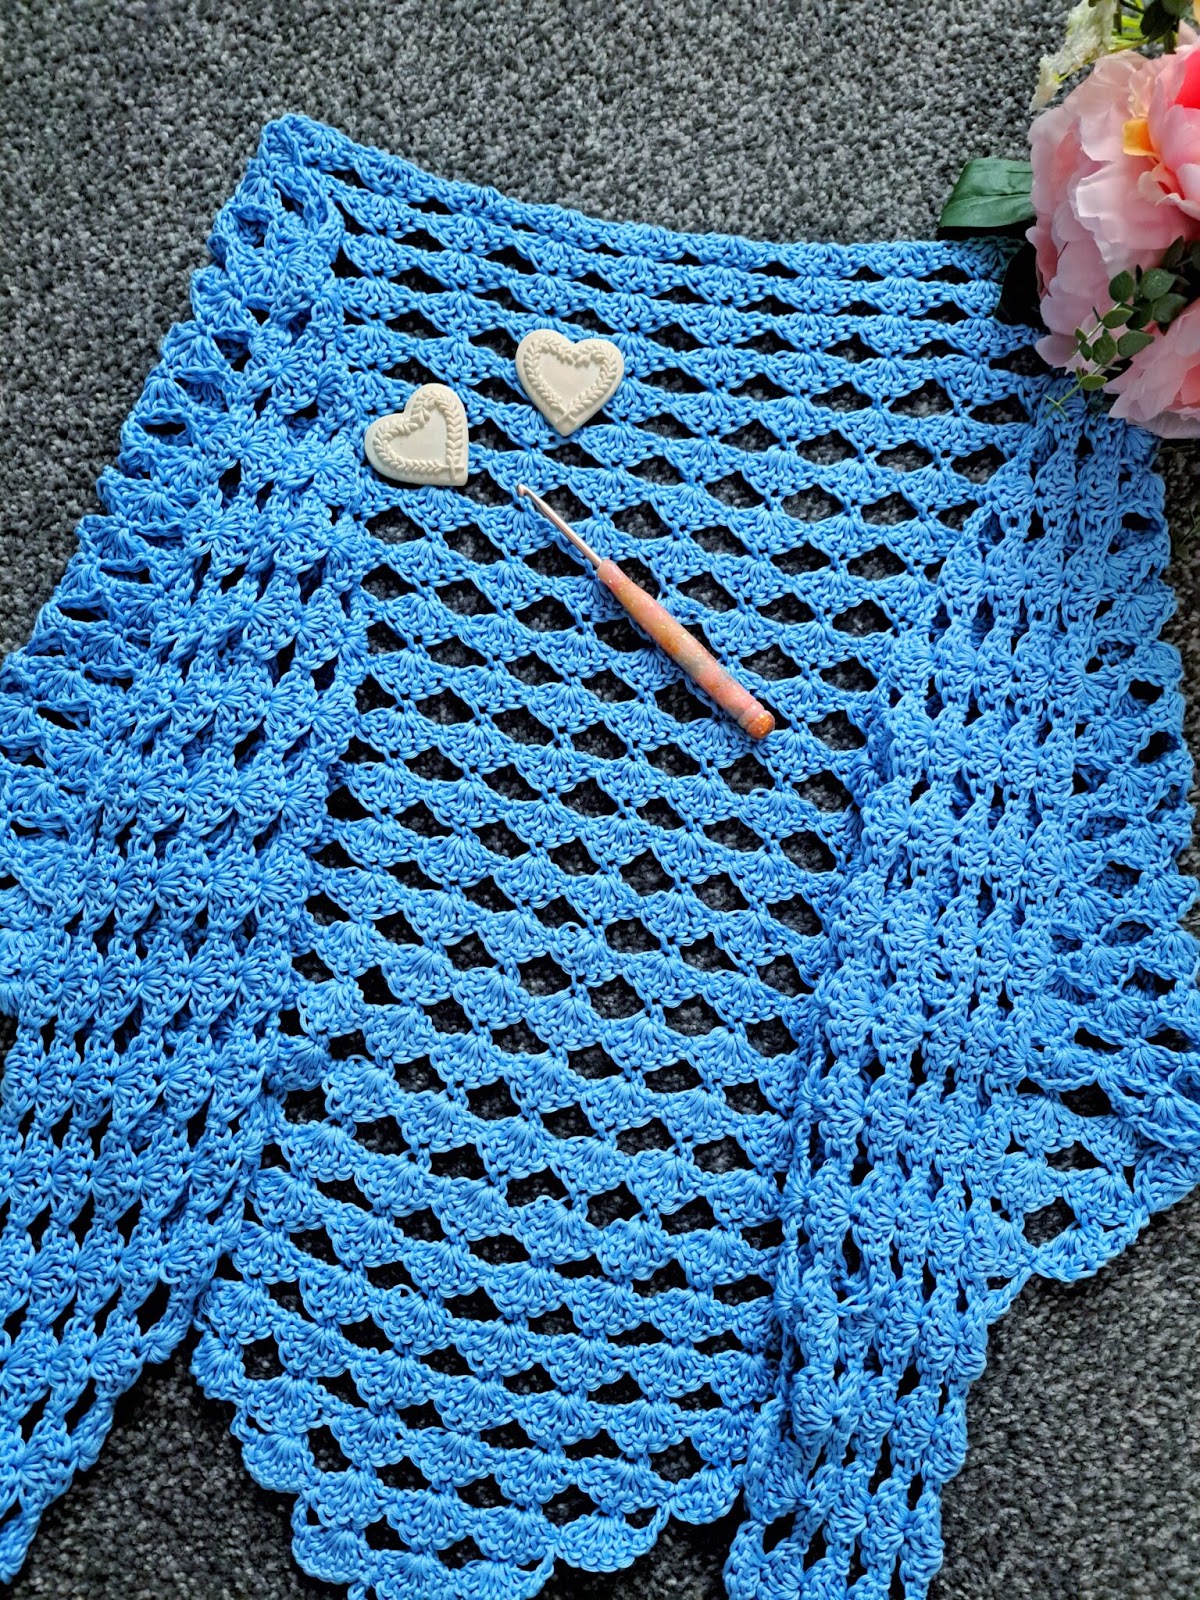 Crochet prayer shawl patterns